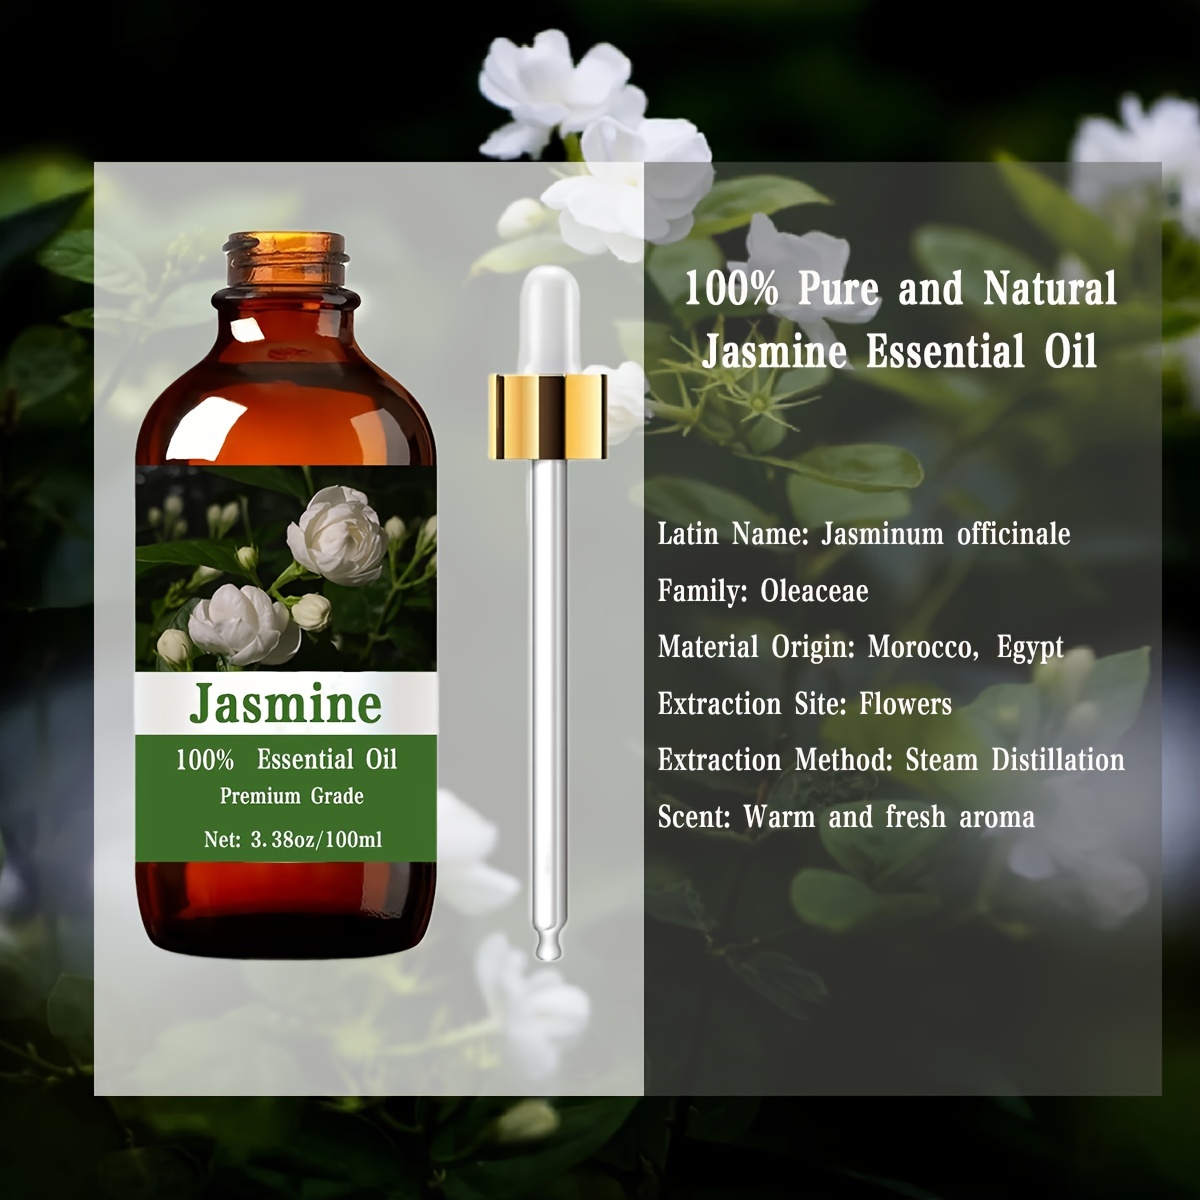 The Benefits of Jasmine Essential Oil